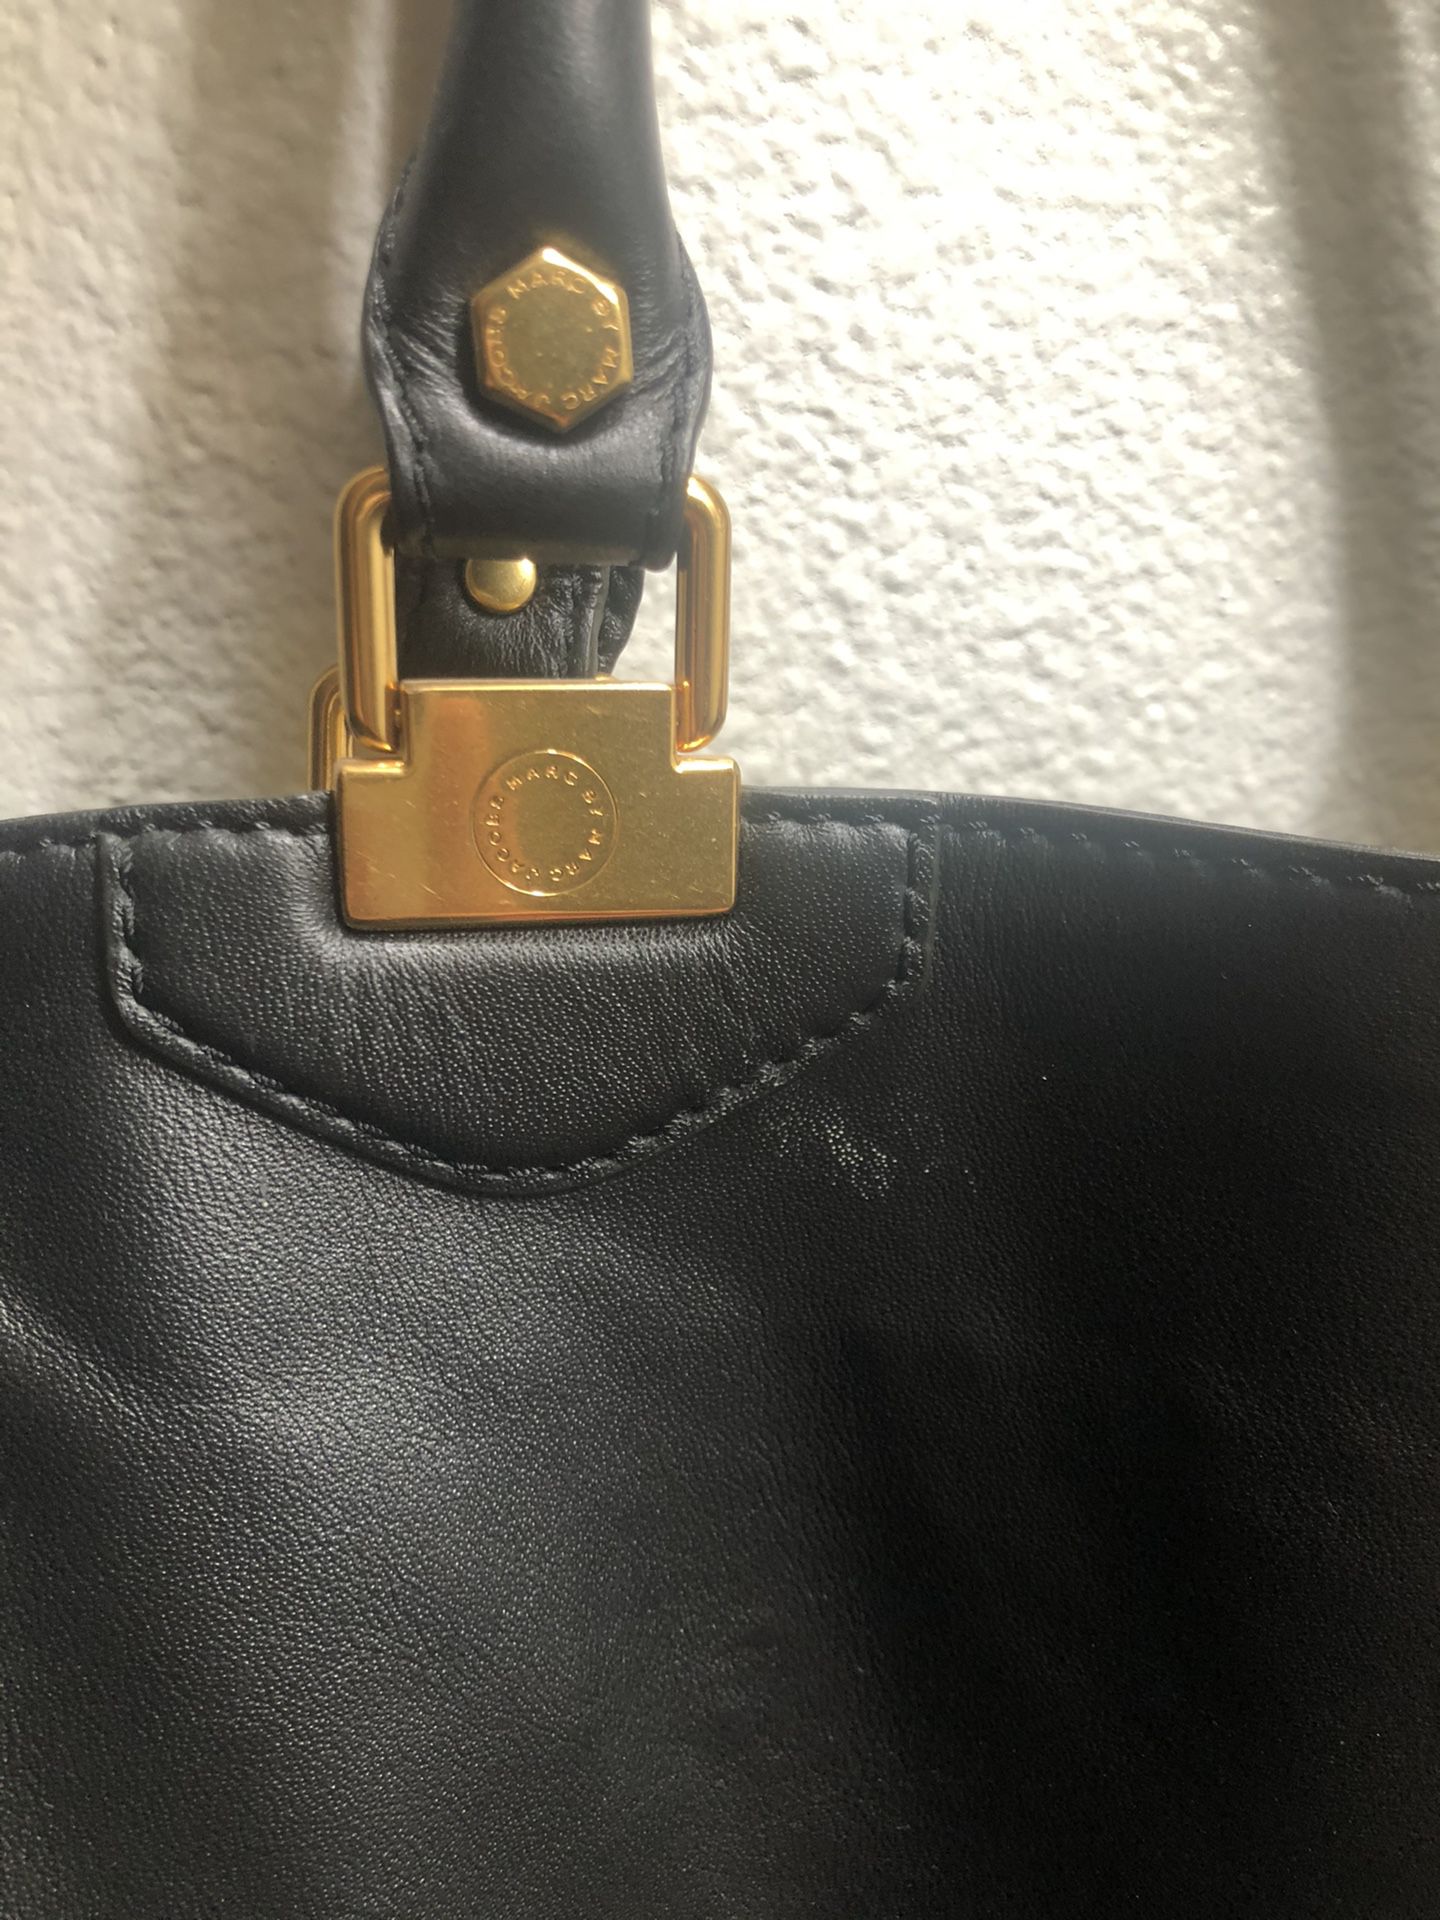 Marc by Marc Jacobs leather black gold Handbag Purse Bag